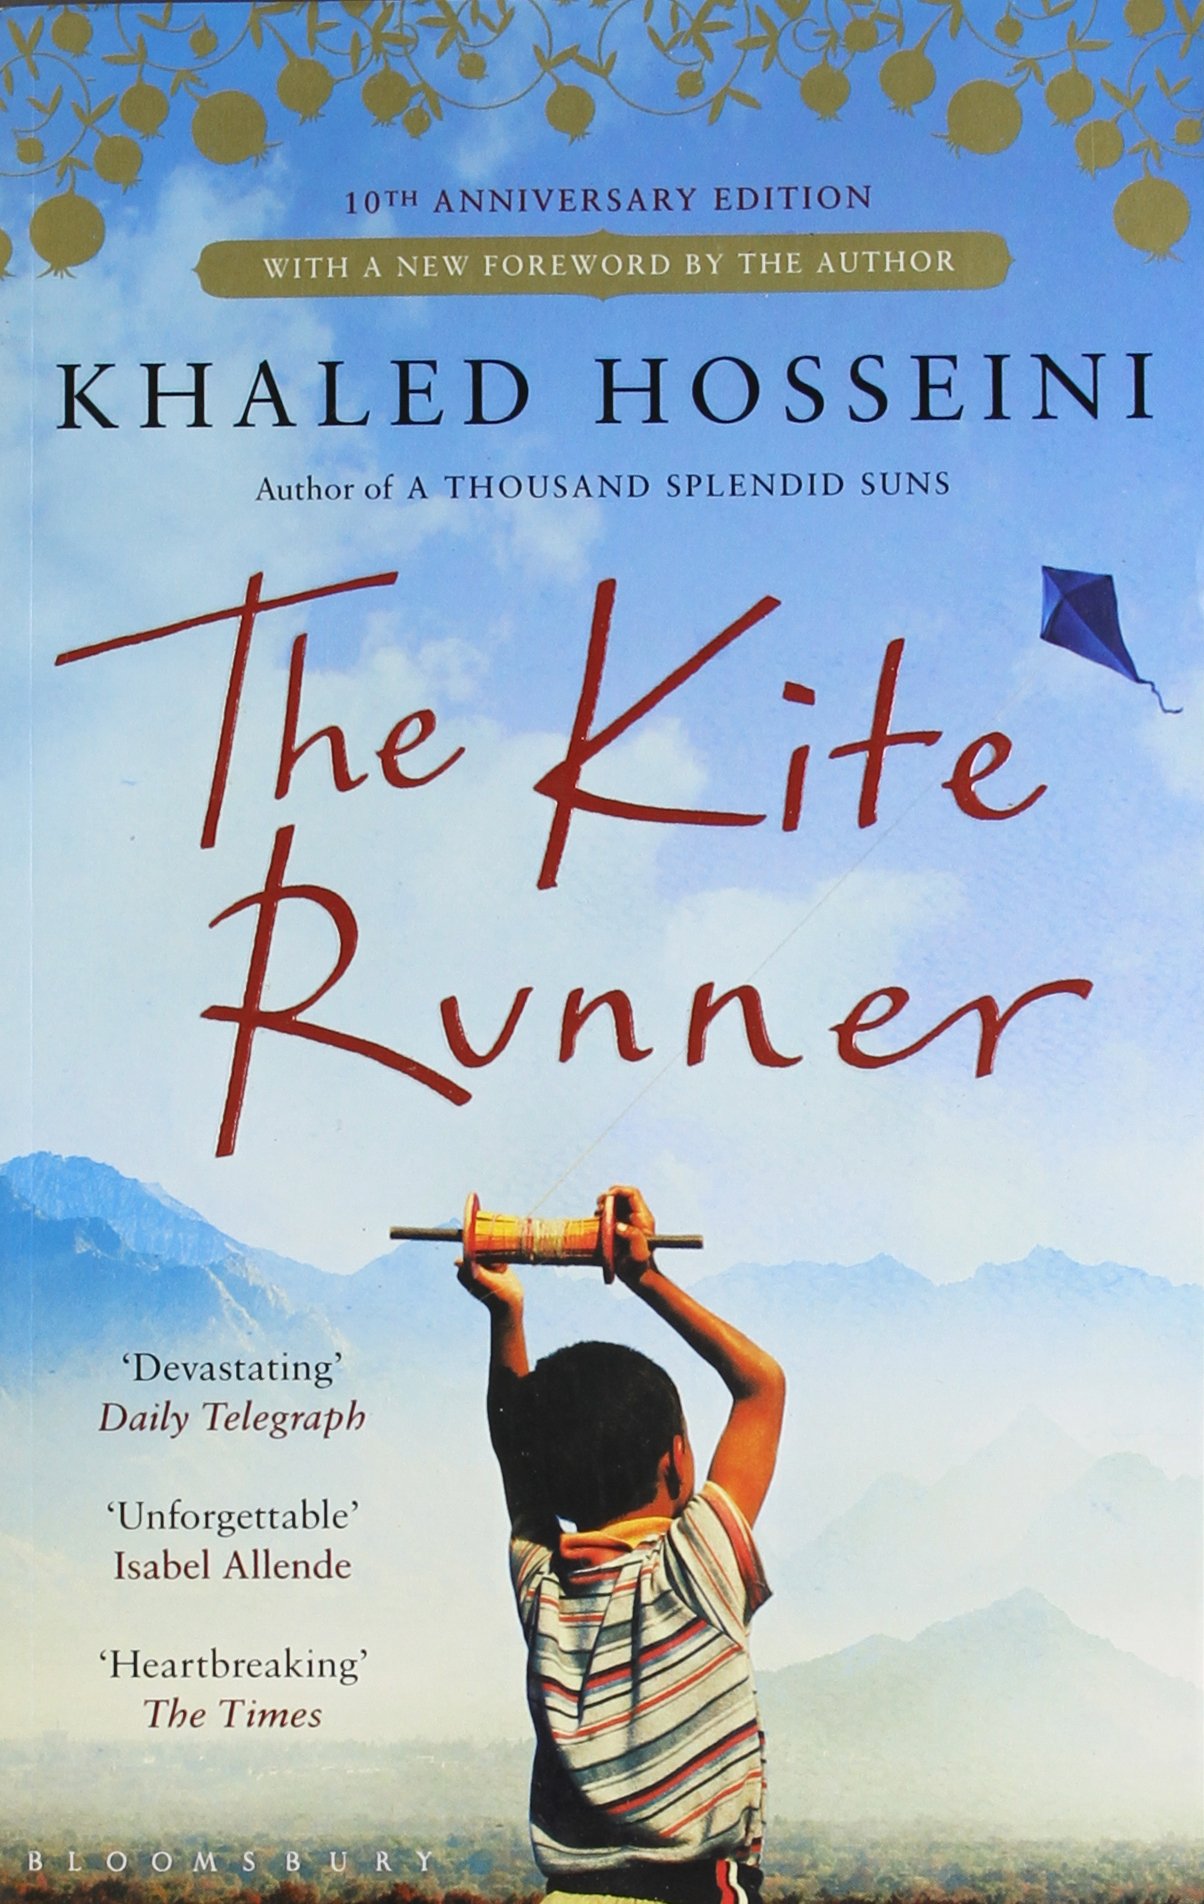  "National Read A Book Day." Hosseini, Khaled. The Kite Runner. Riverhead Books, 2003